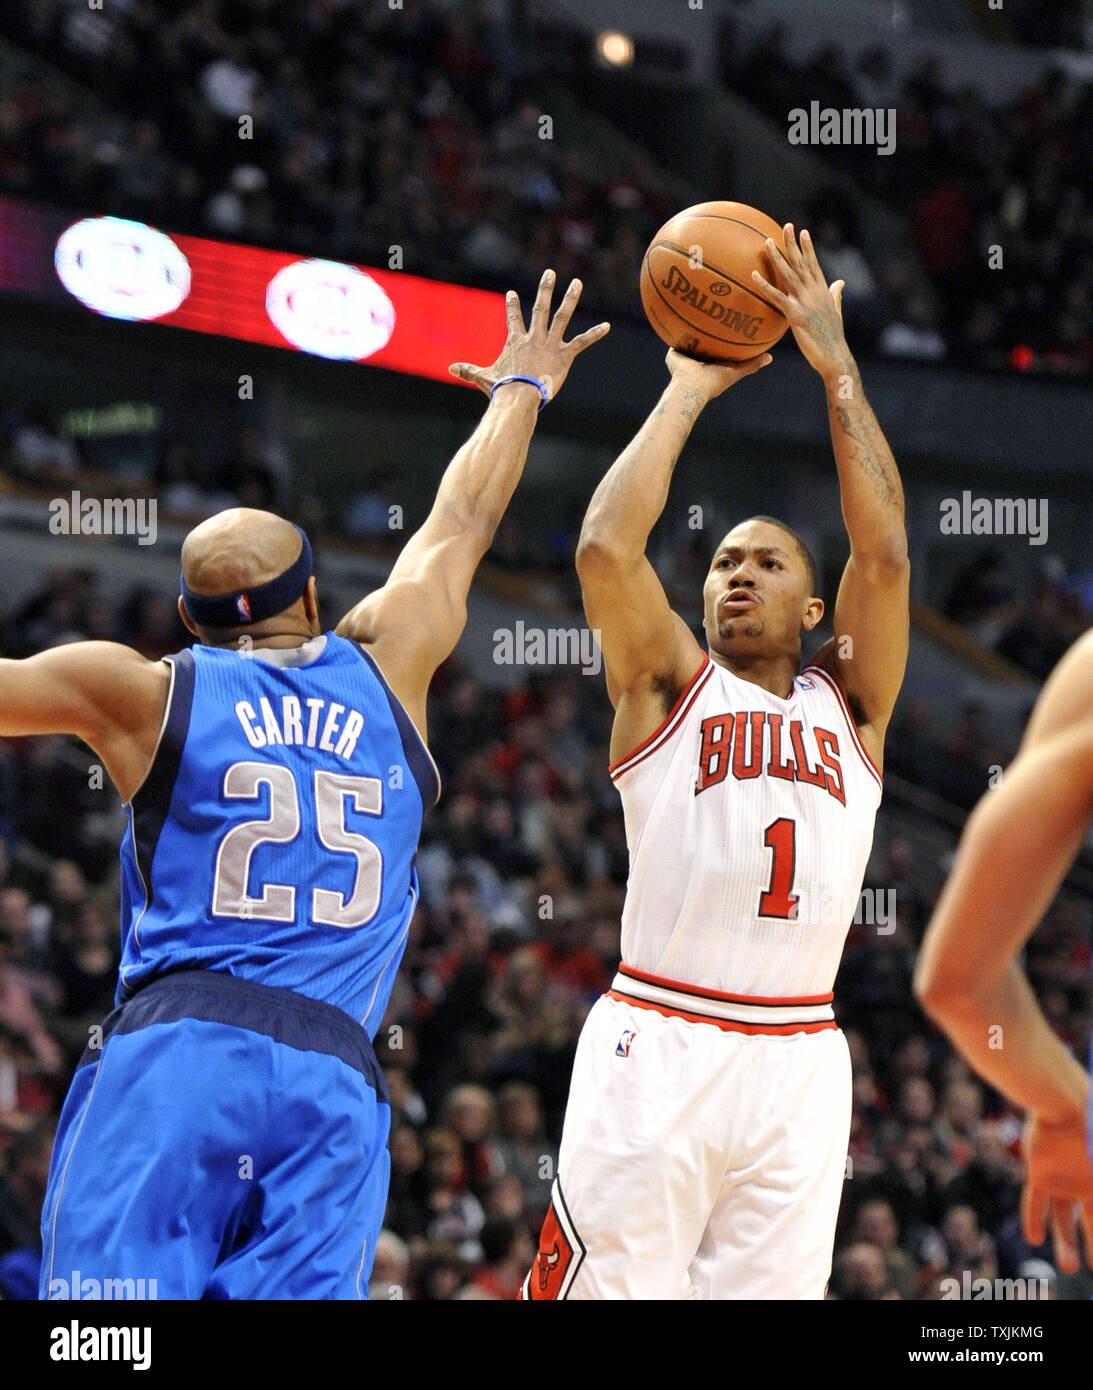 Chicago Bulls guard Derrick Rose shoots during the third quarter